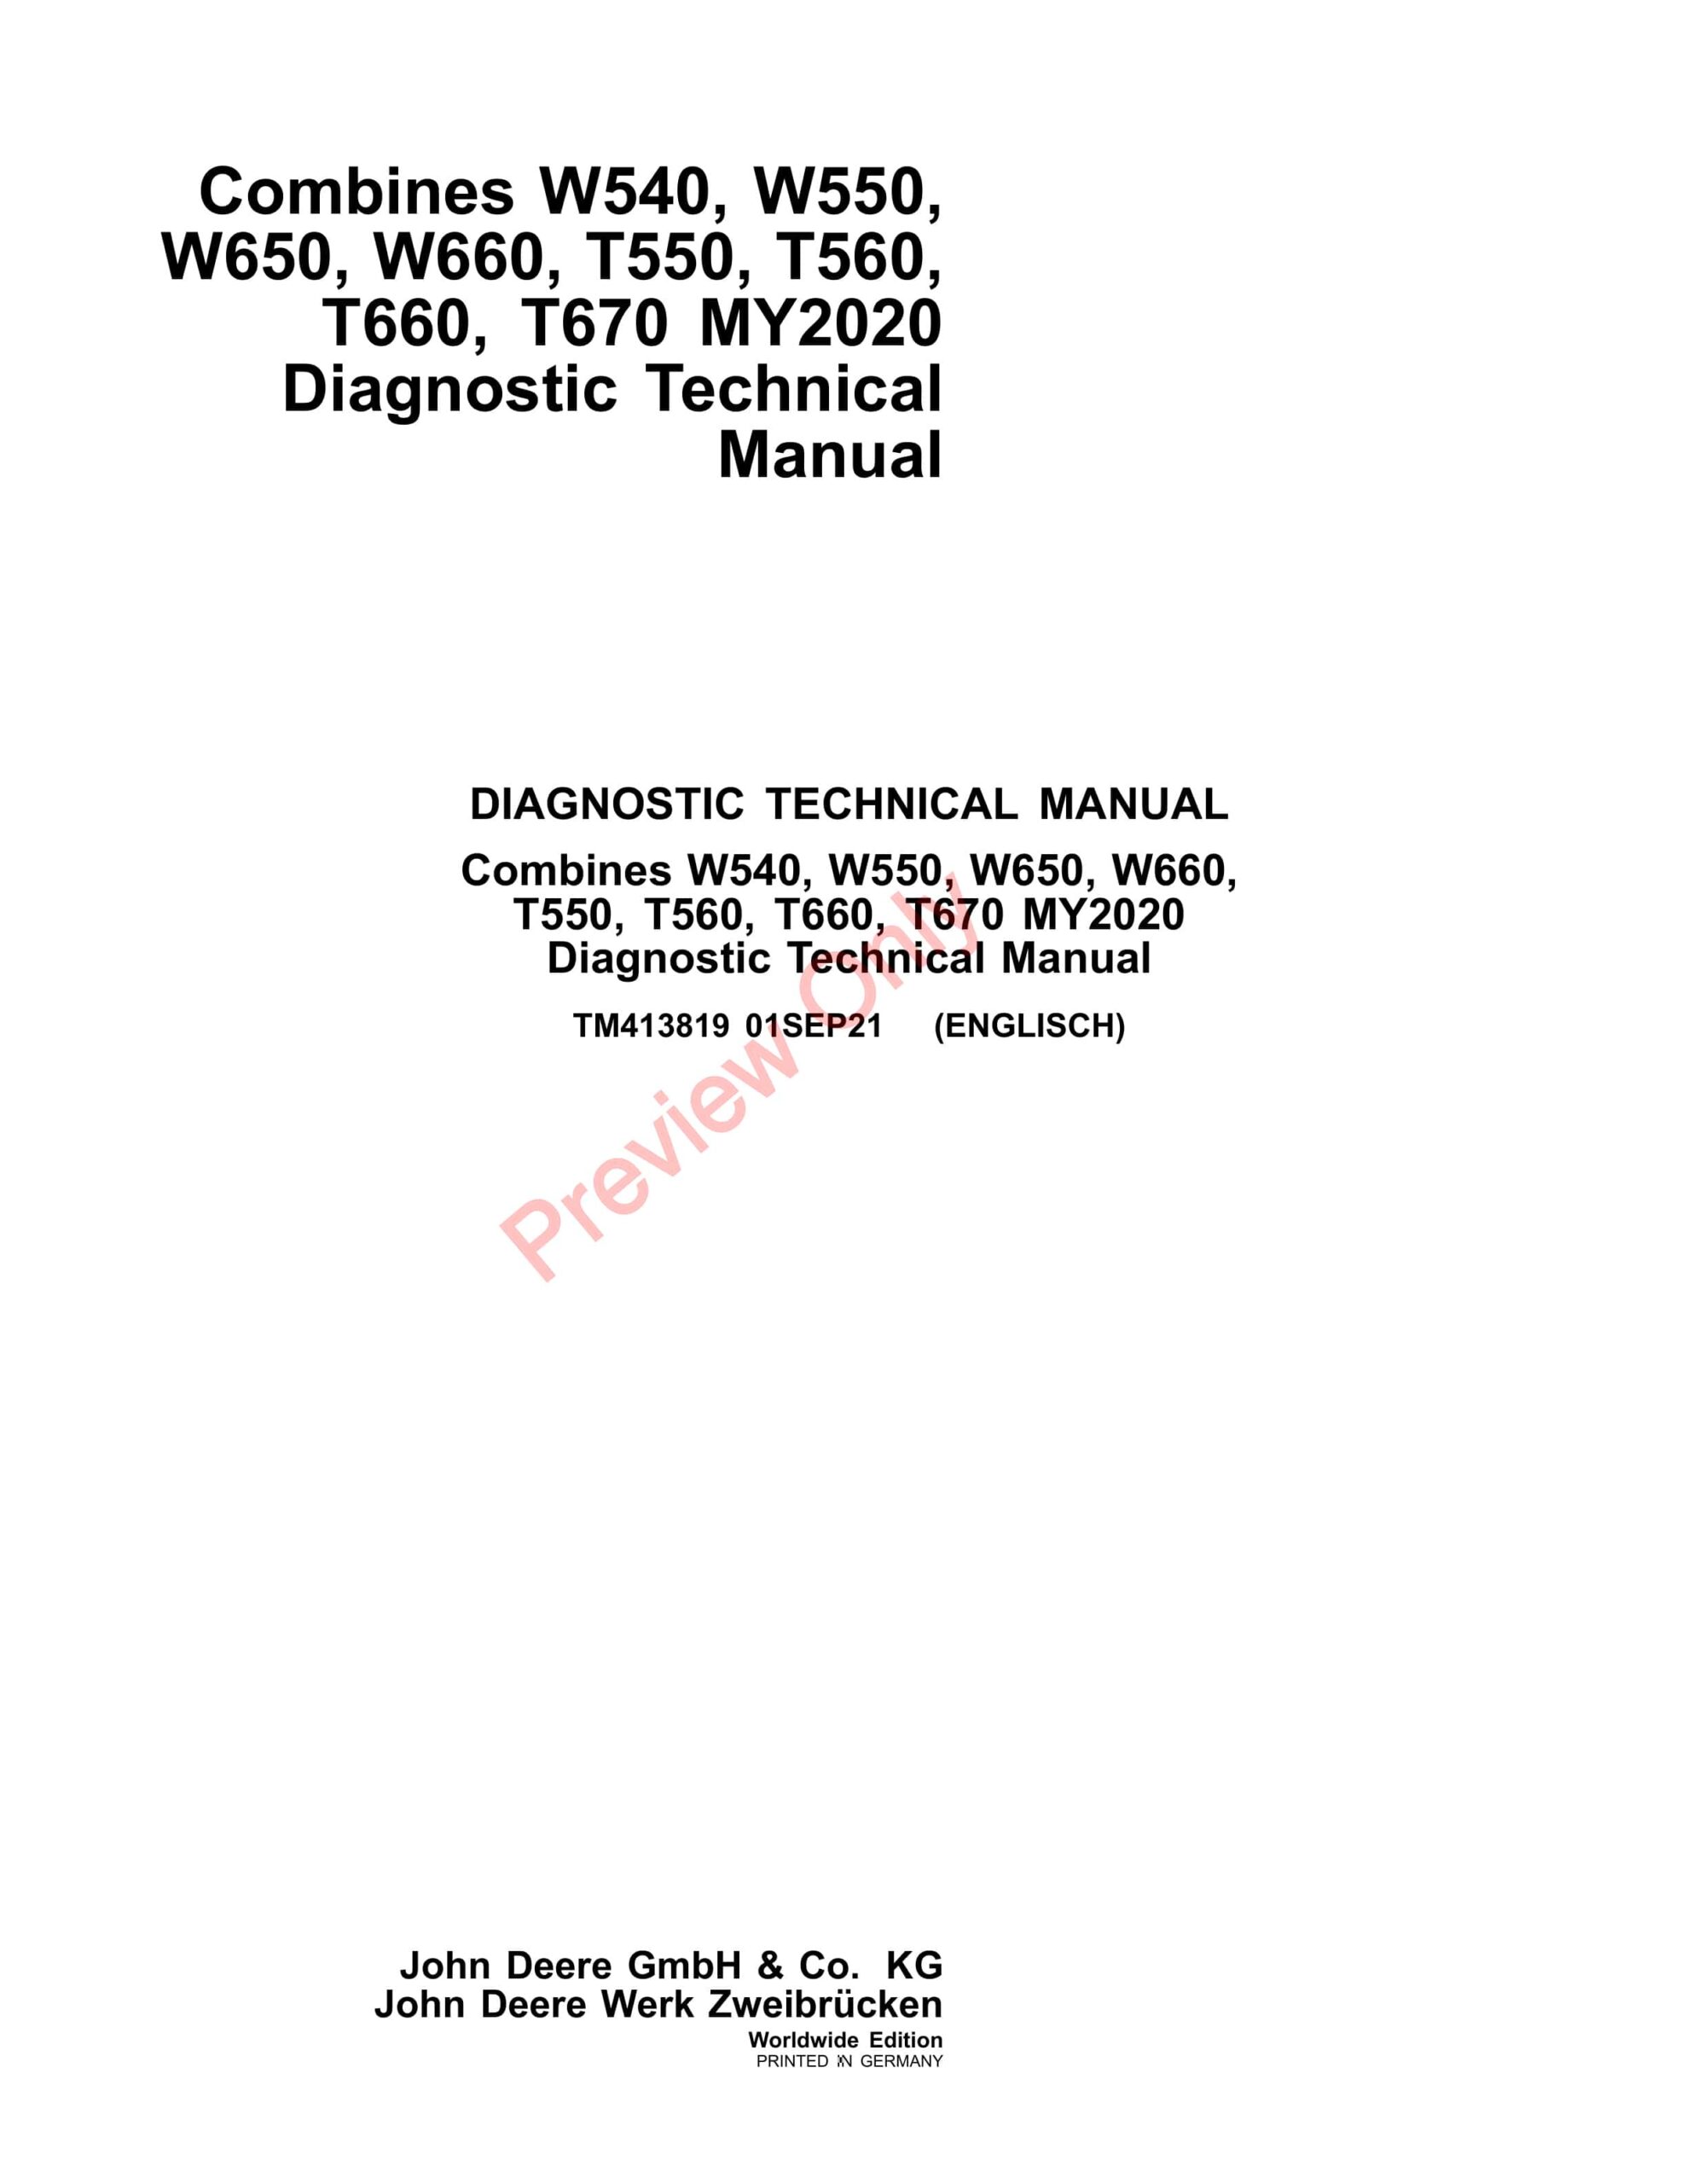 John Deere Combines W540, W550, W650, W660, T550, T560, T660, T670 MY2020 Diagnostic Technical Manual TM413819 01SEP21-1